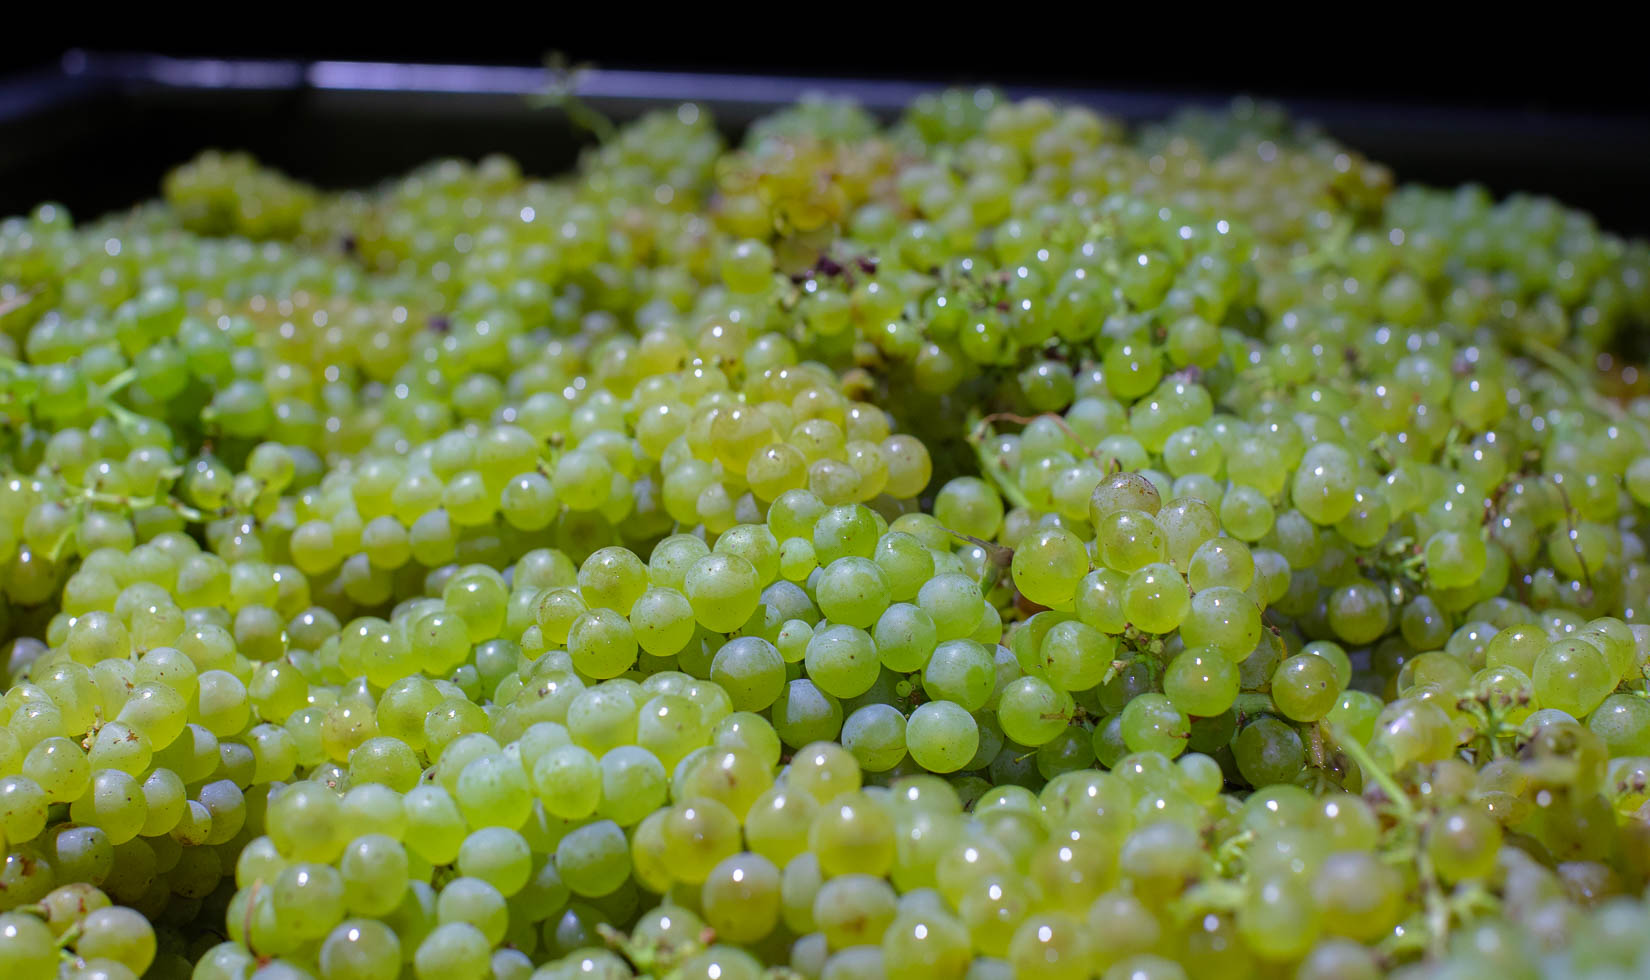 gondola full of chardonnay grape clusters